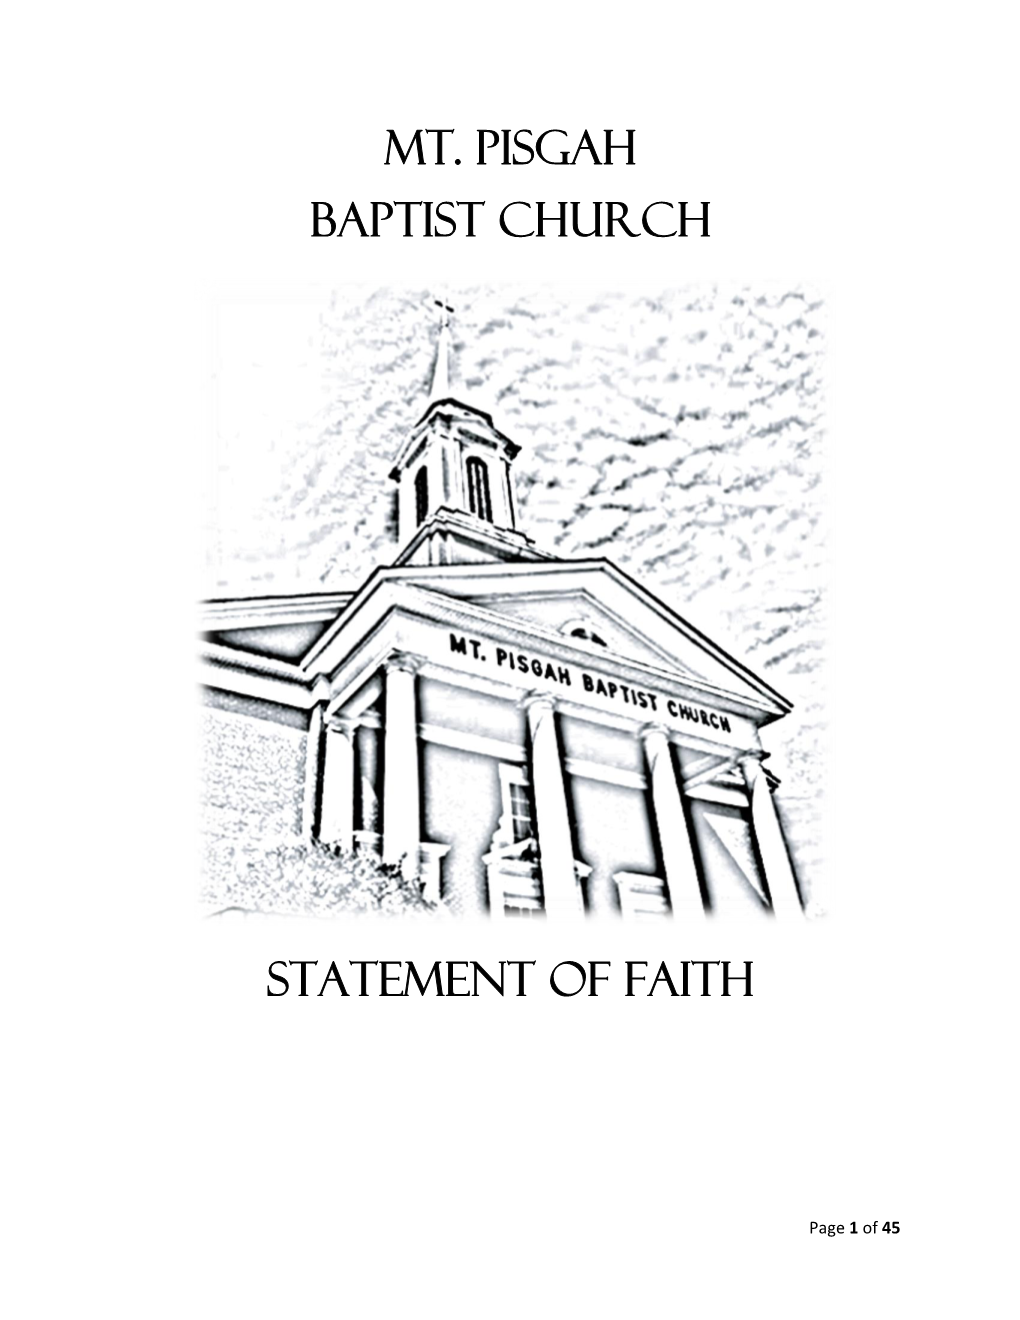 Mt. Pisgah Baptist Church Statement of Faith